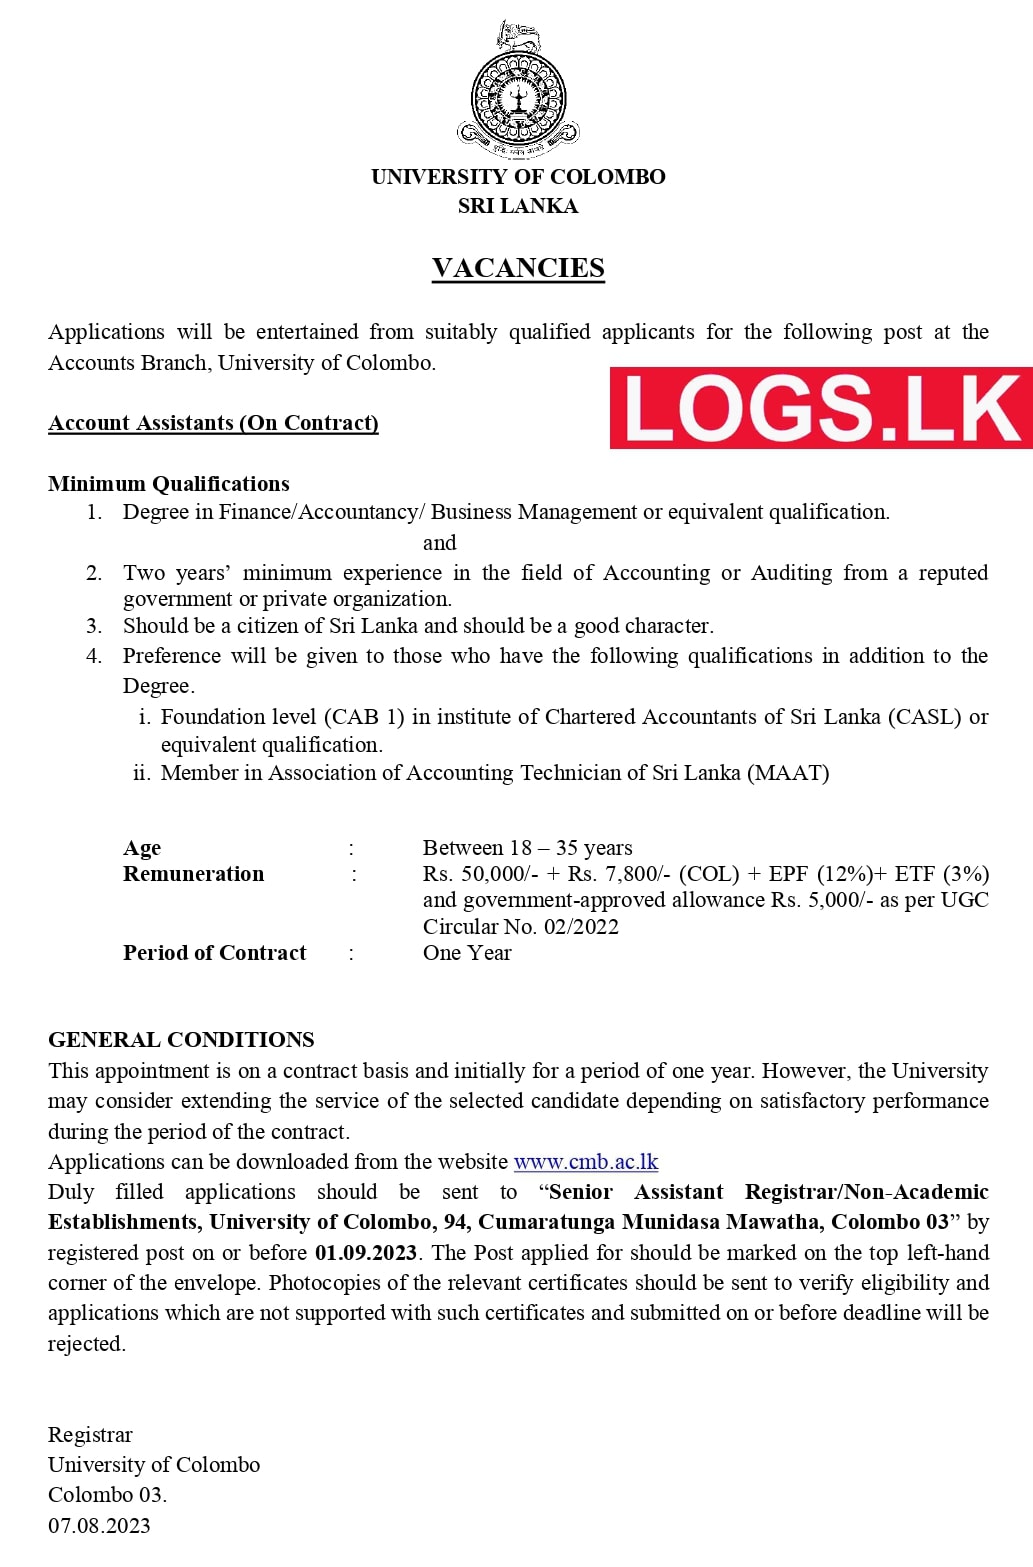 Account Assistants - University of Colombo Job Vacancies 2023 Application Form